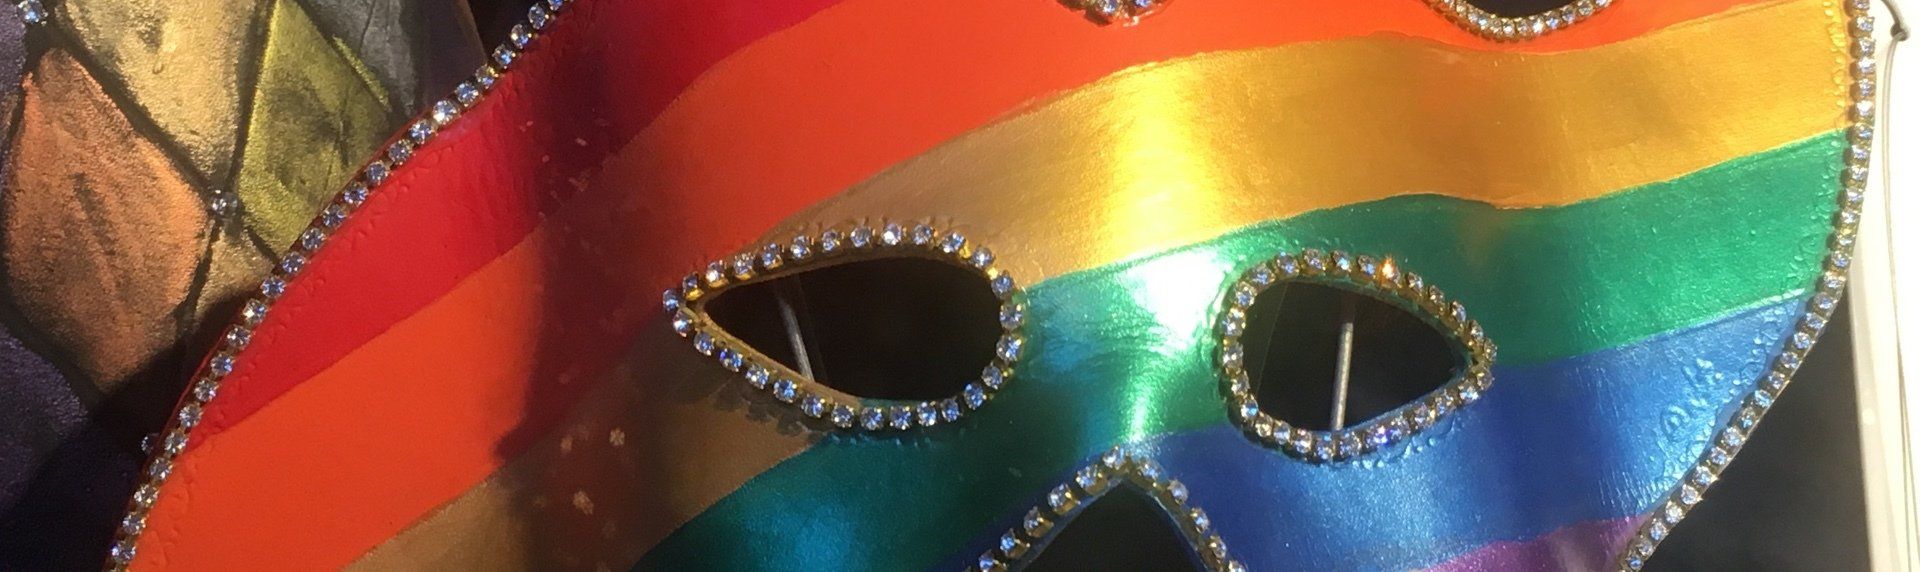 LGBT pride mardi gras mask